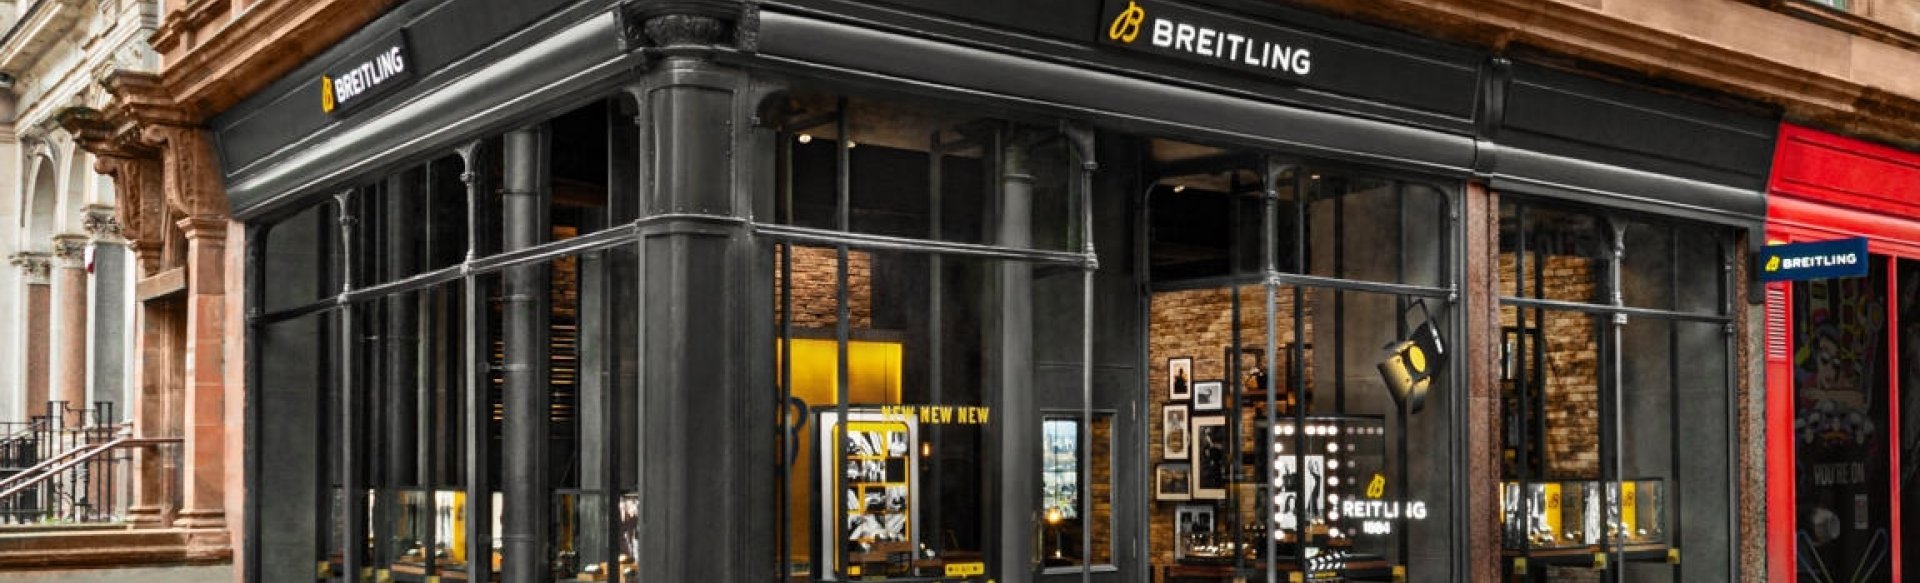 Breitling Boutique Glasgow